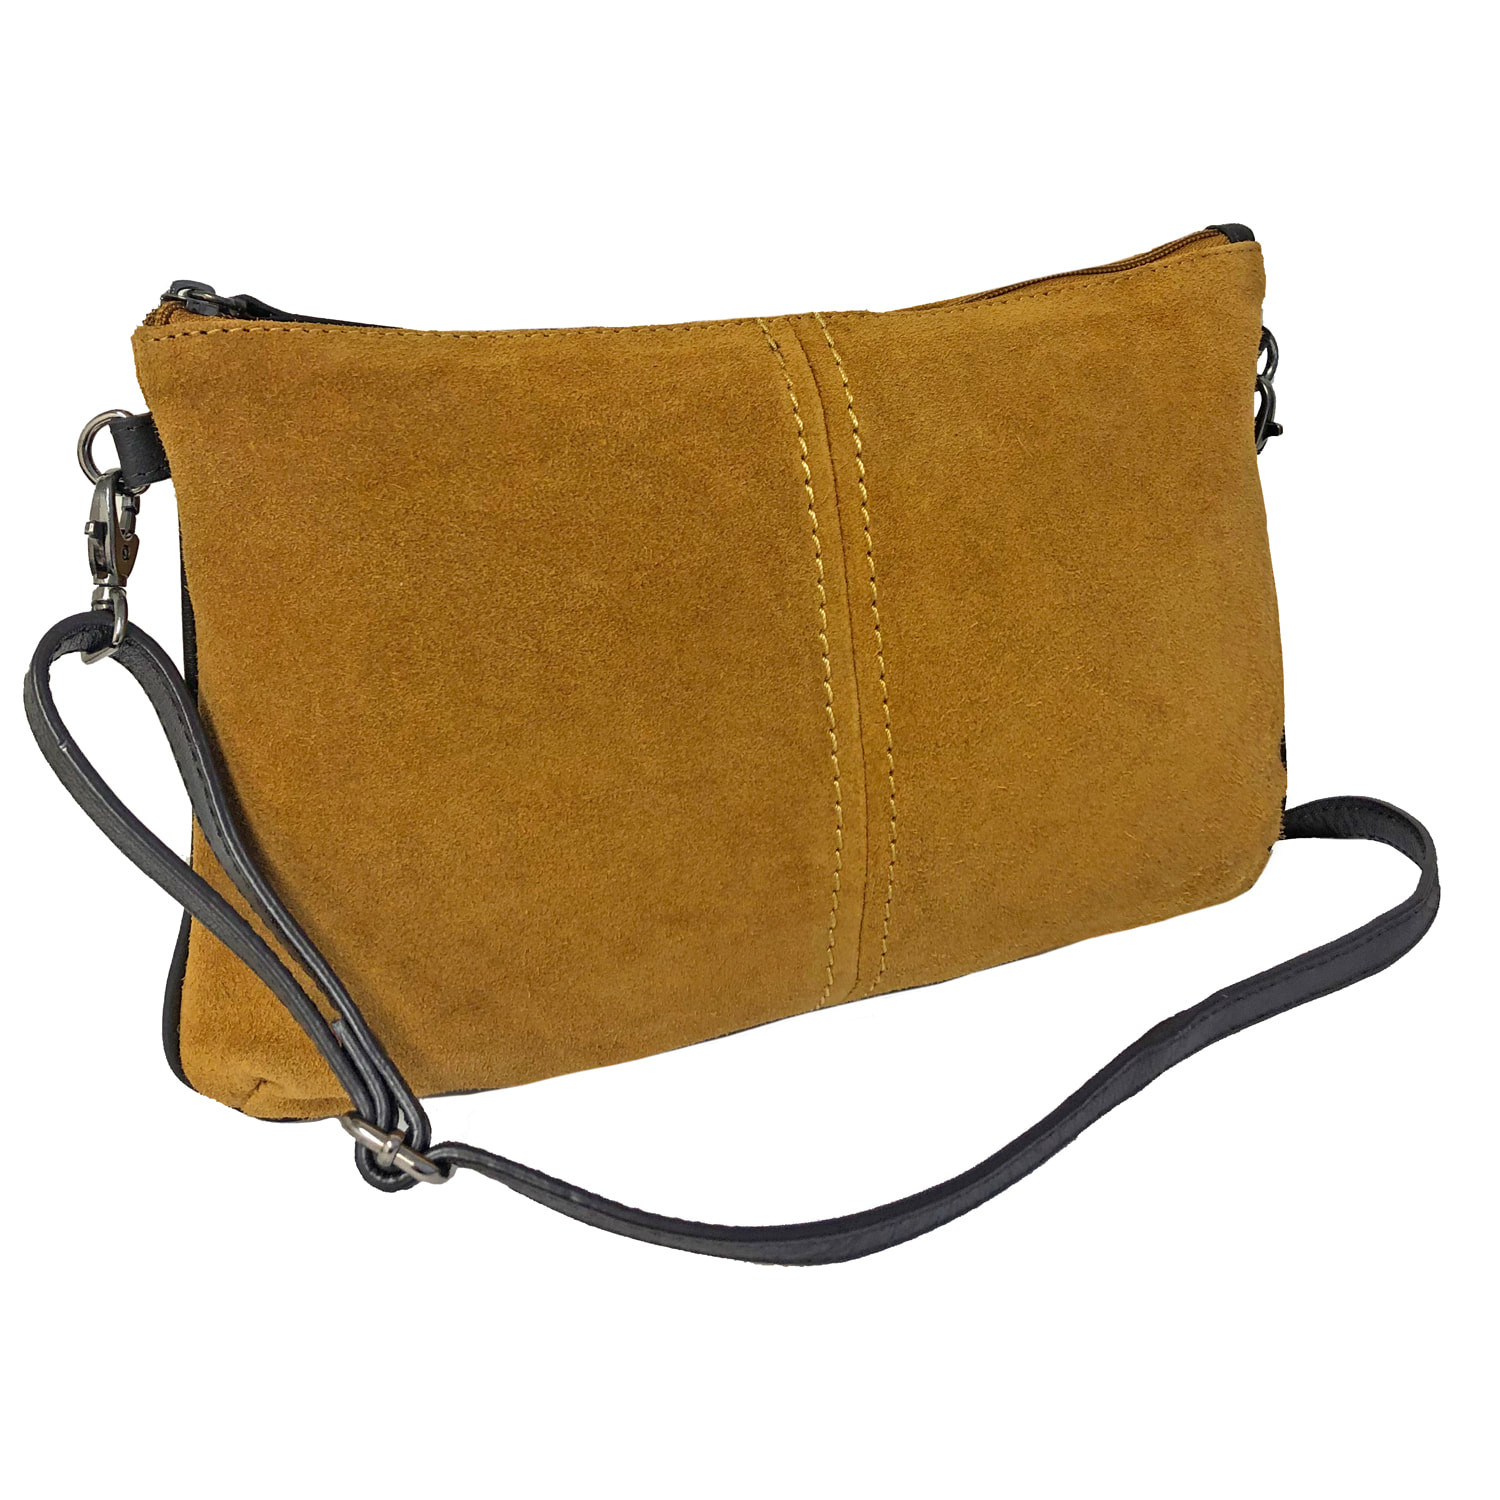 Rowallan Brown Leather Shoulder Bag, Handbag | IUCN Water